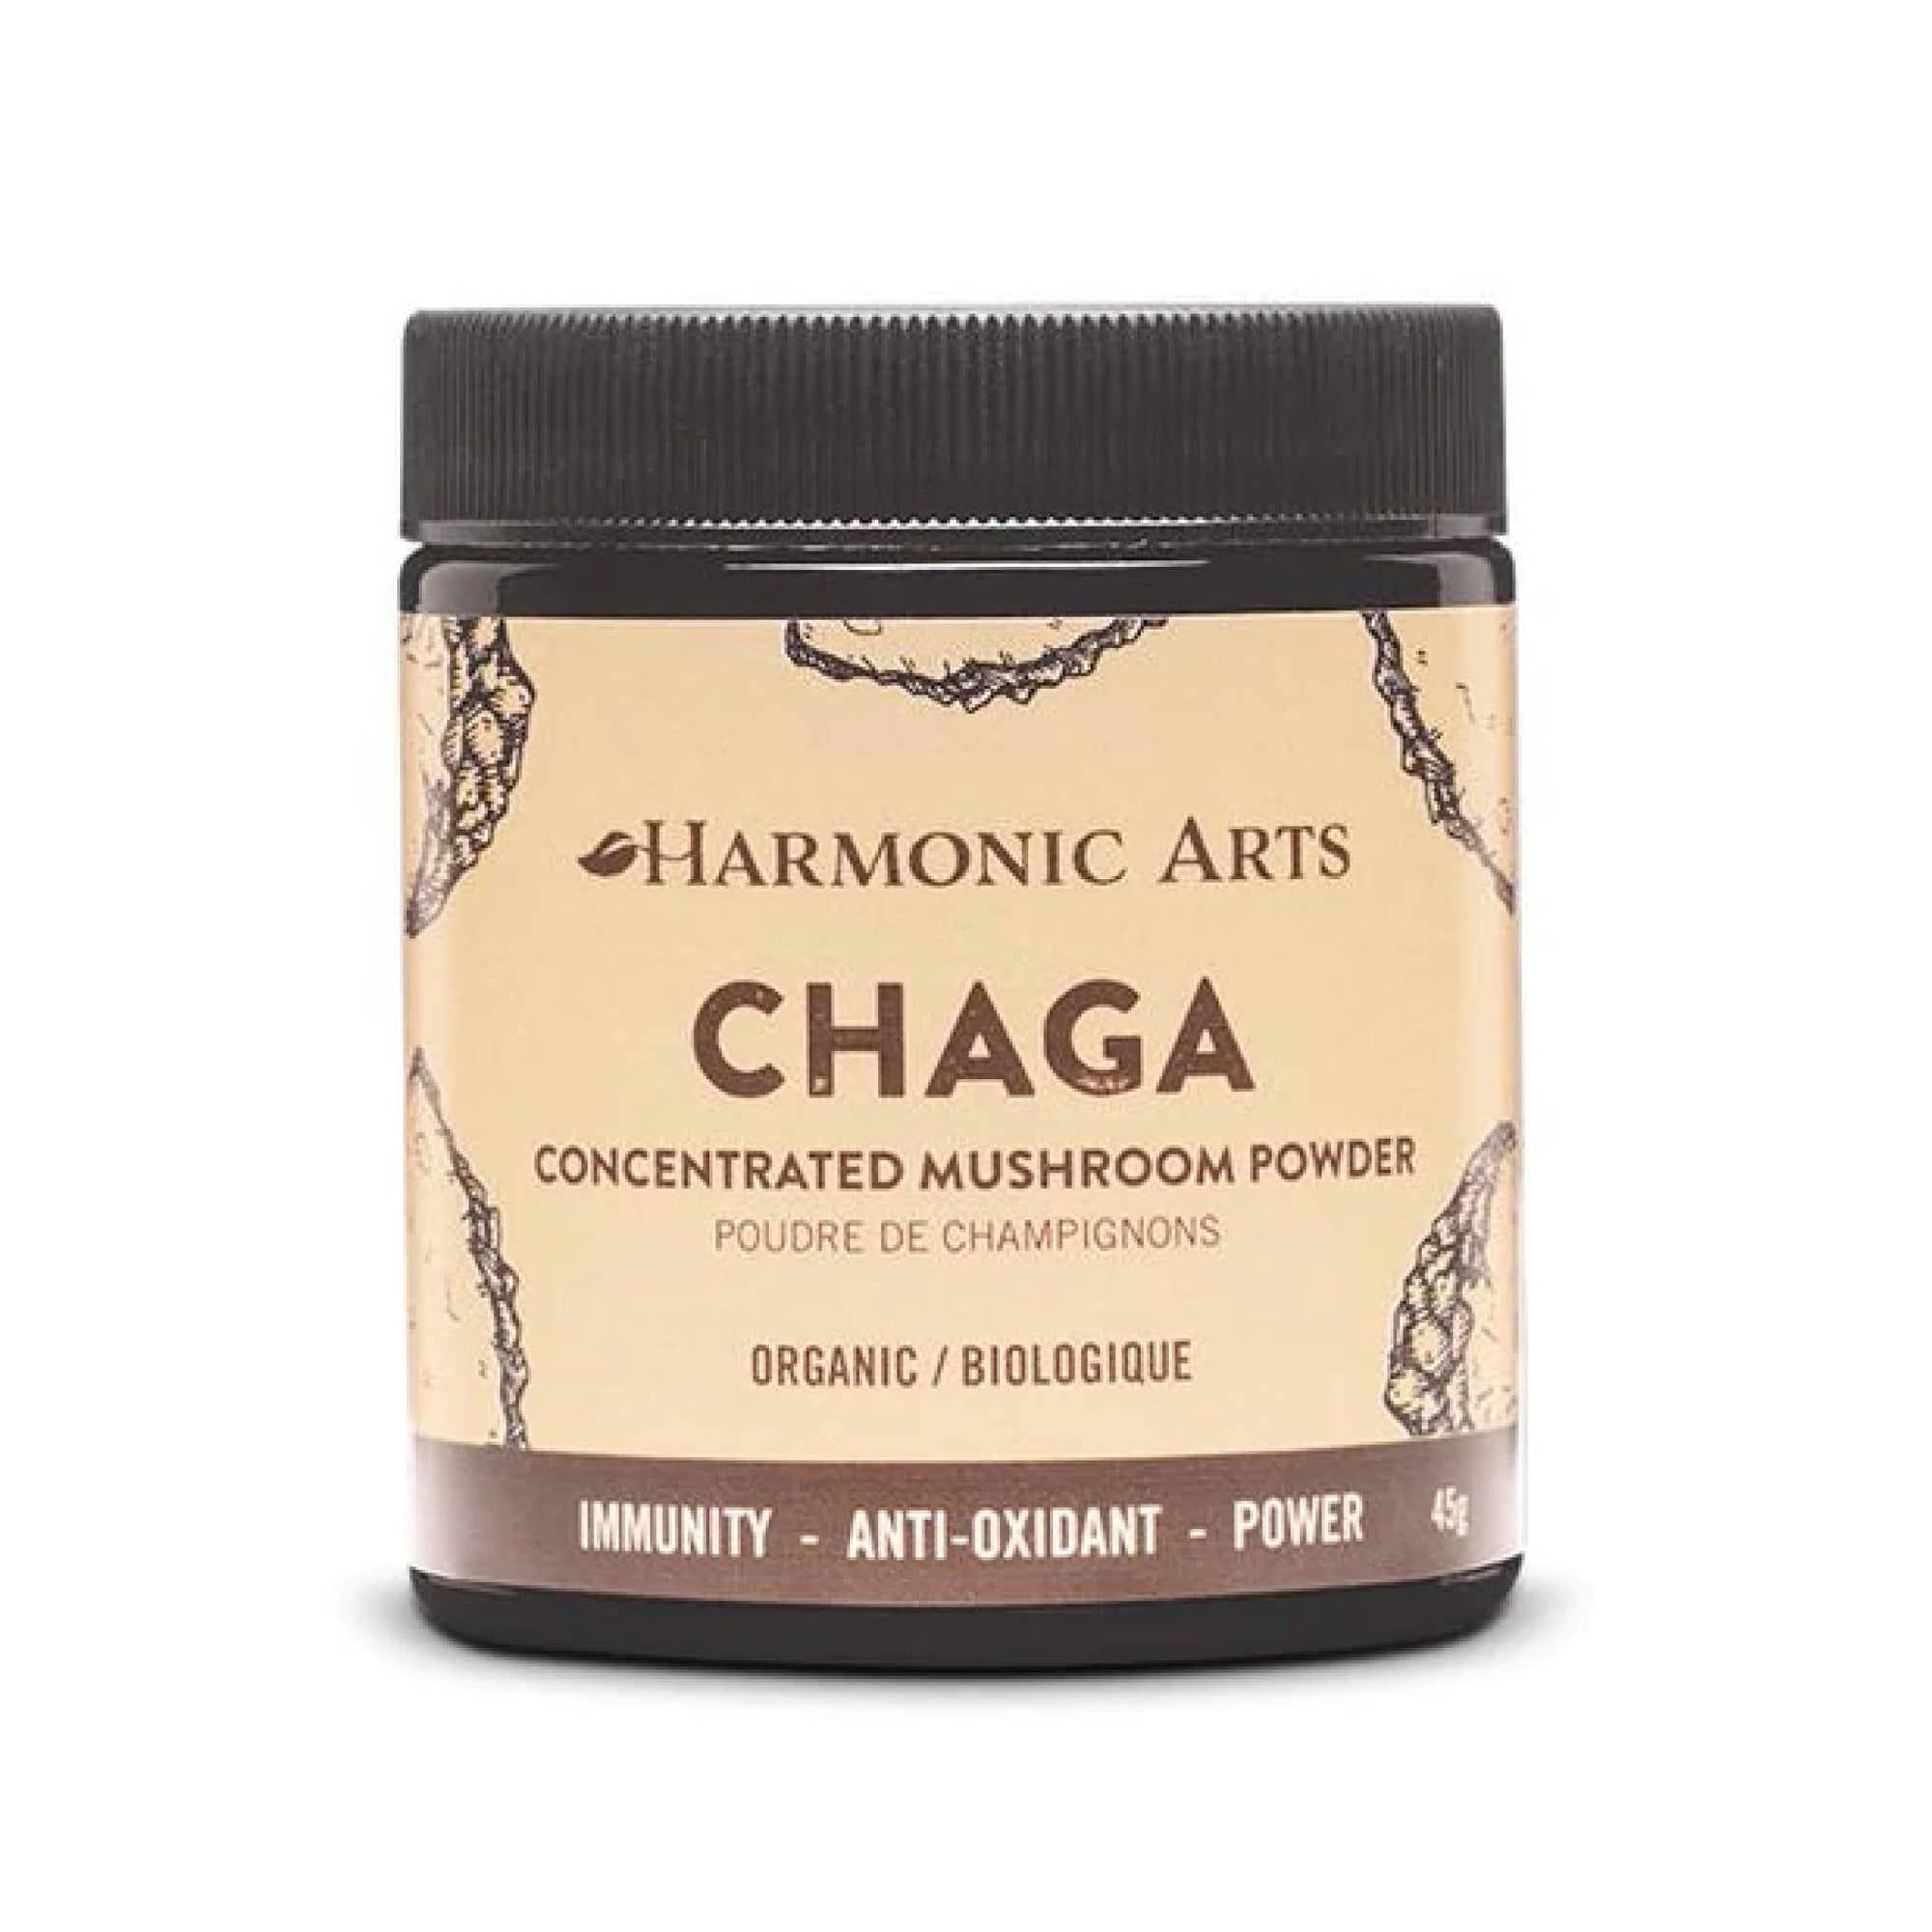 Harmonic Arts Organic Chaga Concentrated Mushroom Powder 45g